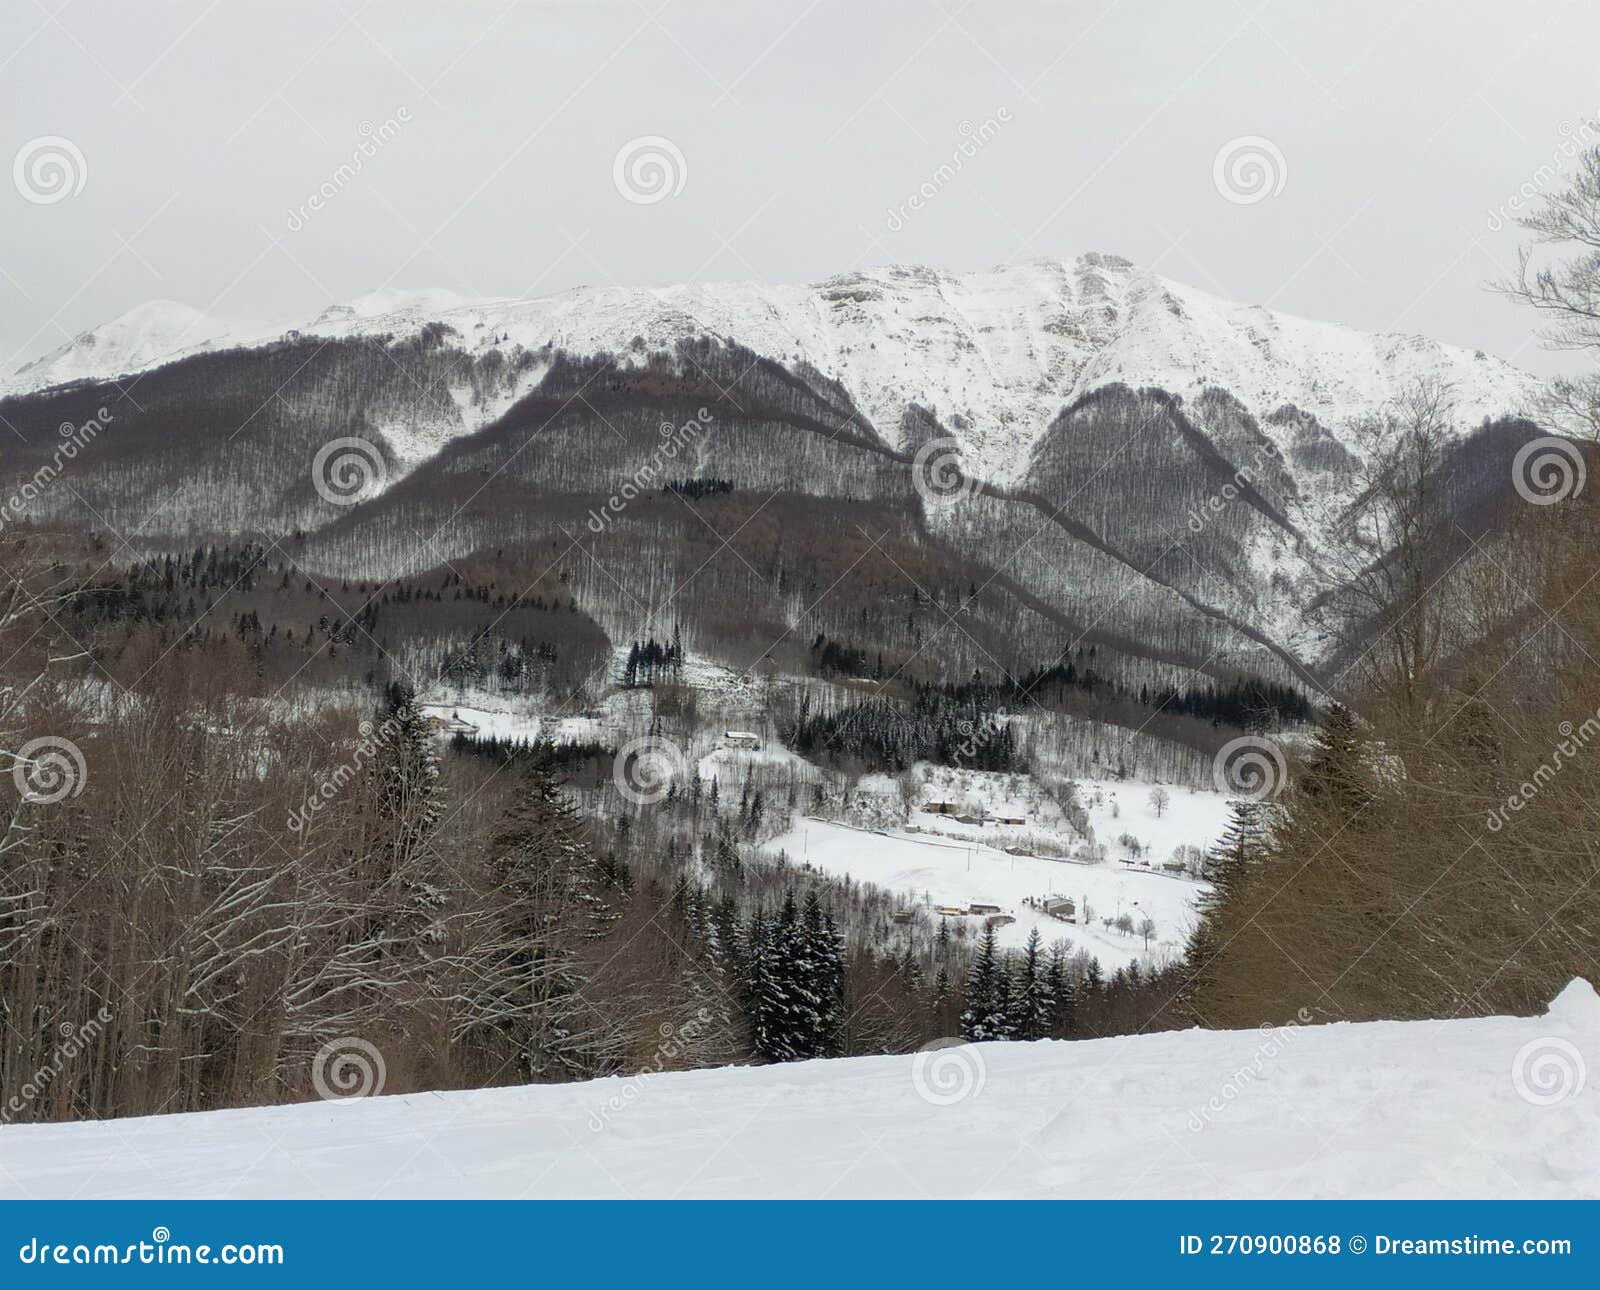 snow covered mountains in winter, abetone, pistoia, italy,